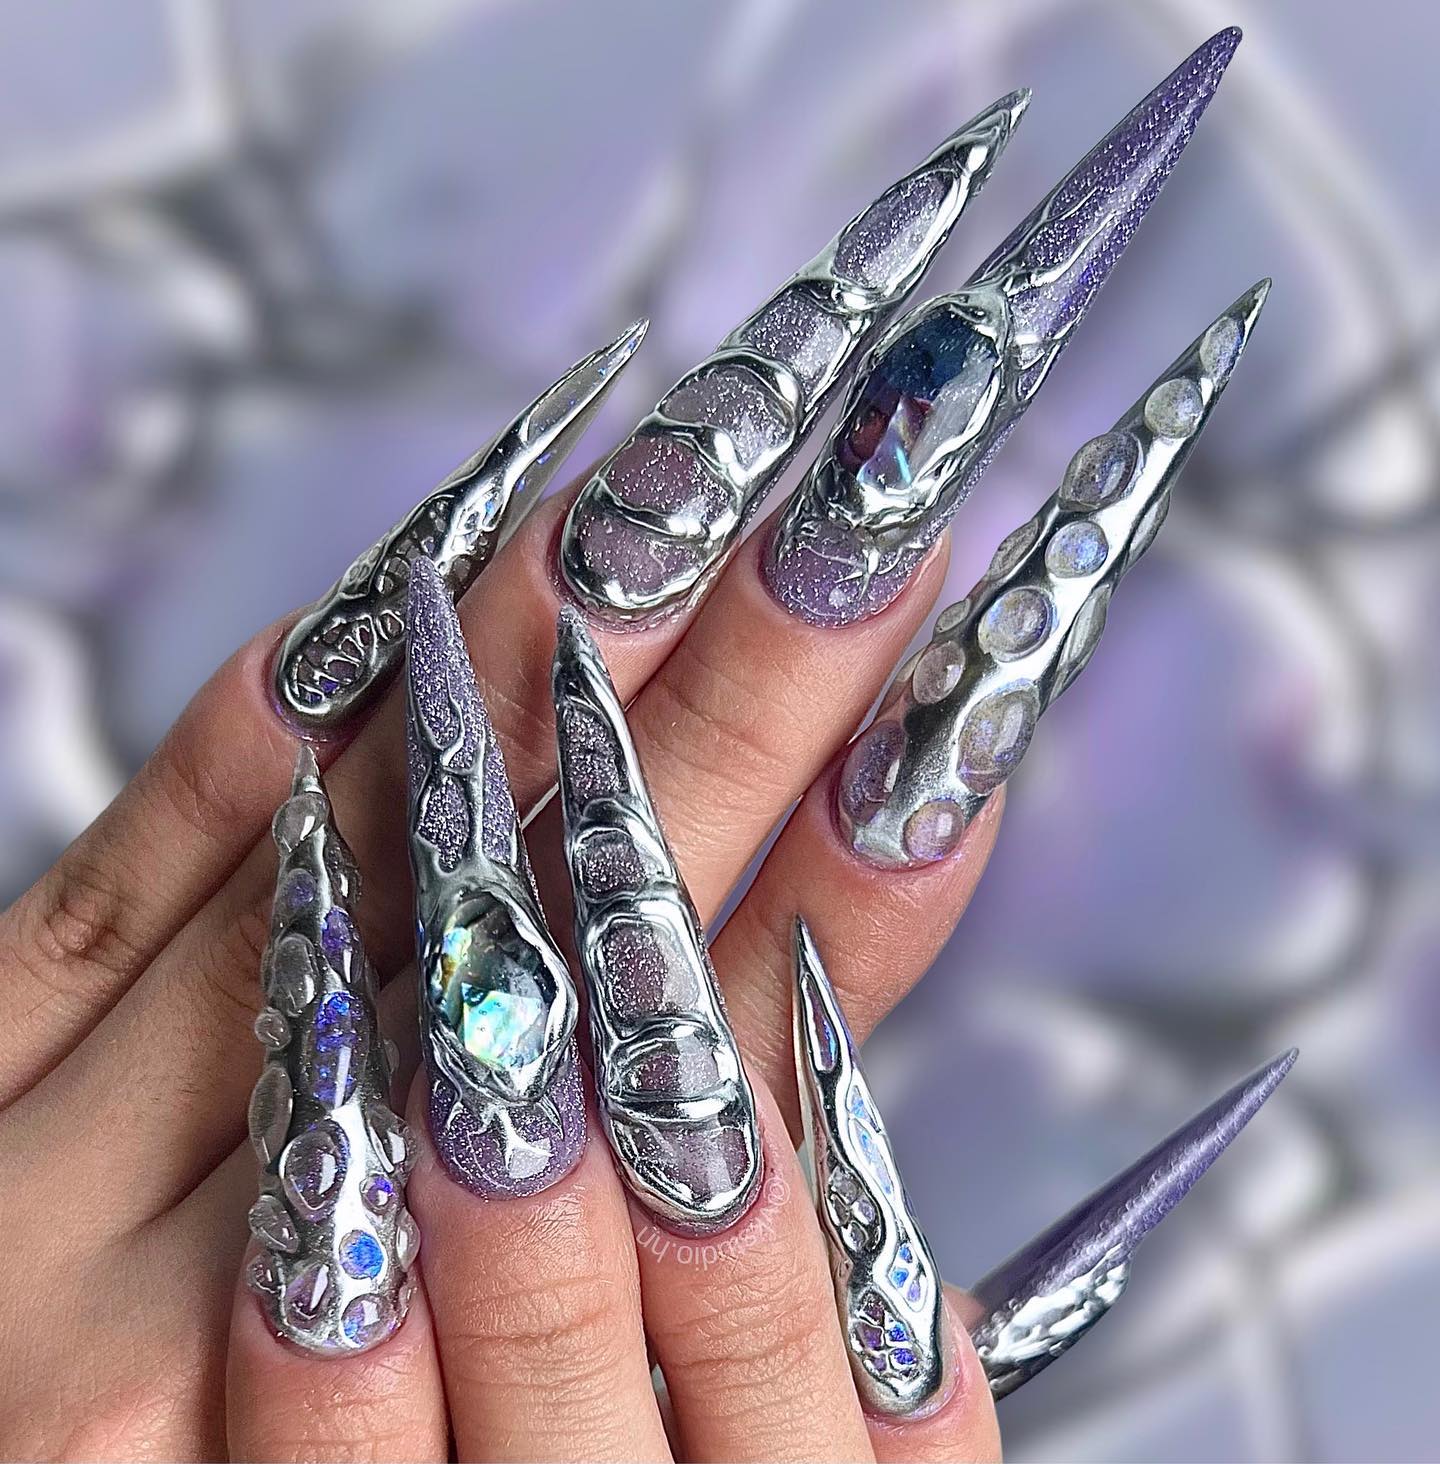 Chrome Stiletto Nails with 3D Design